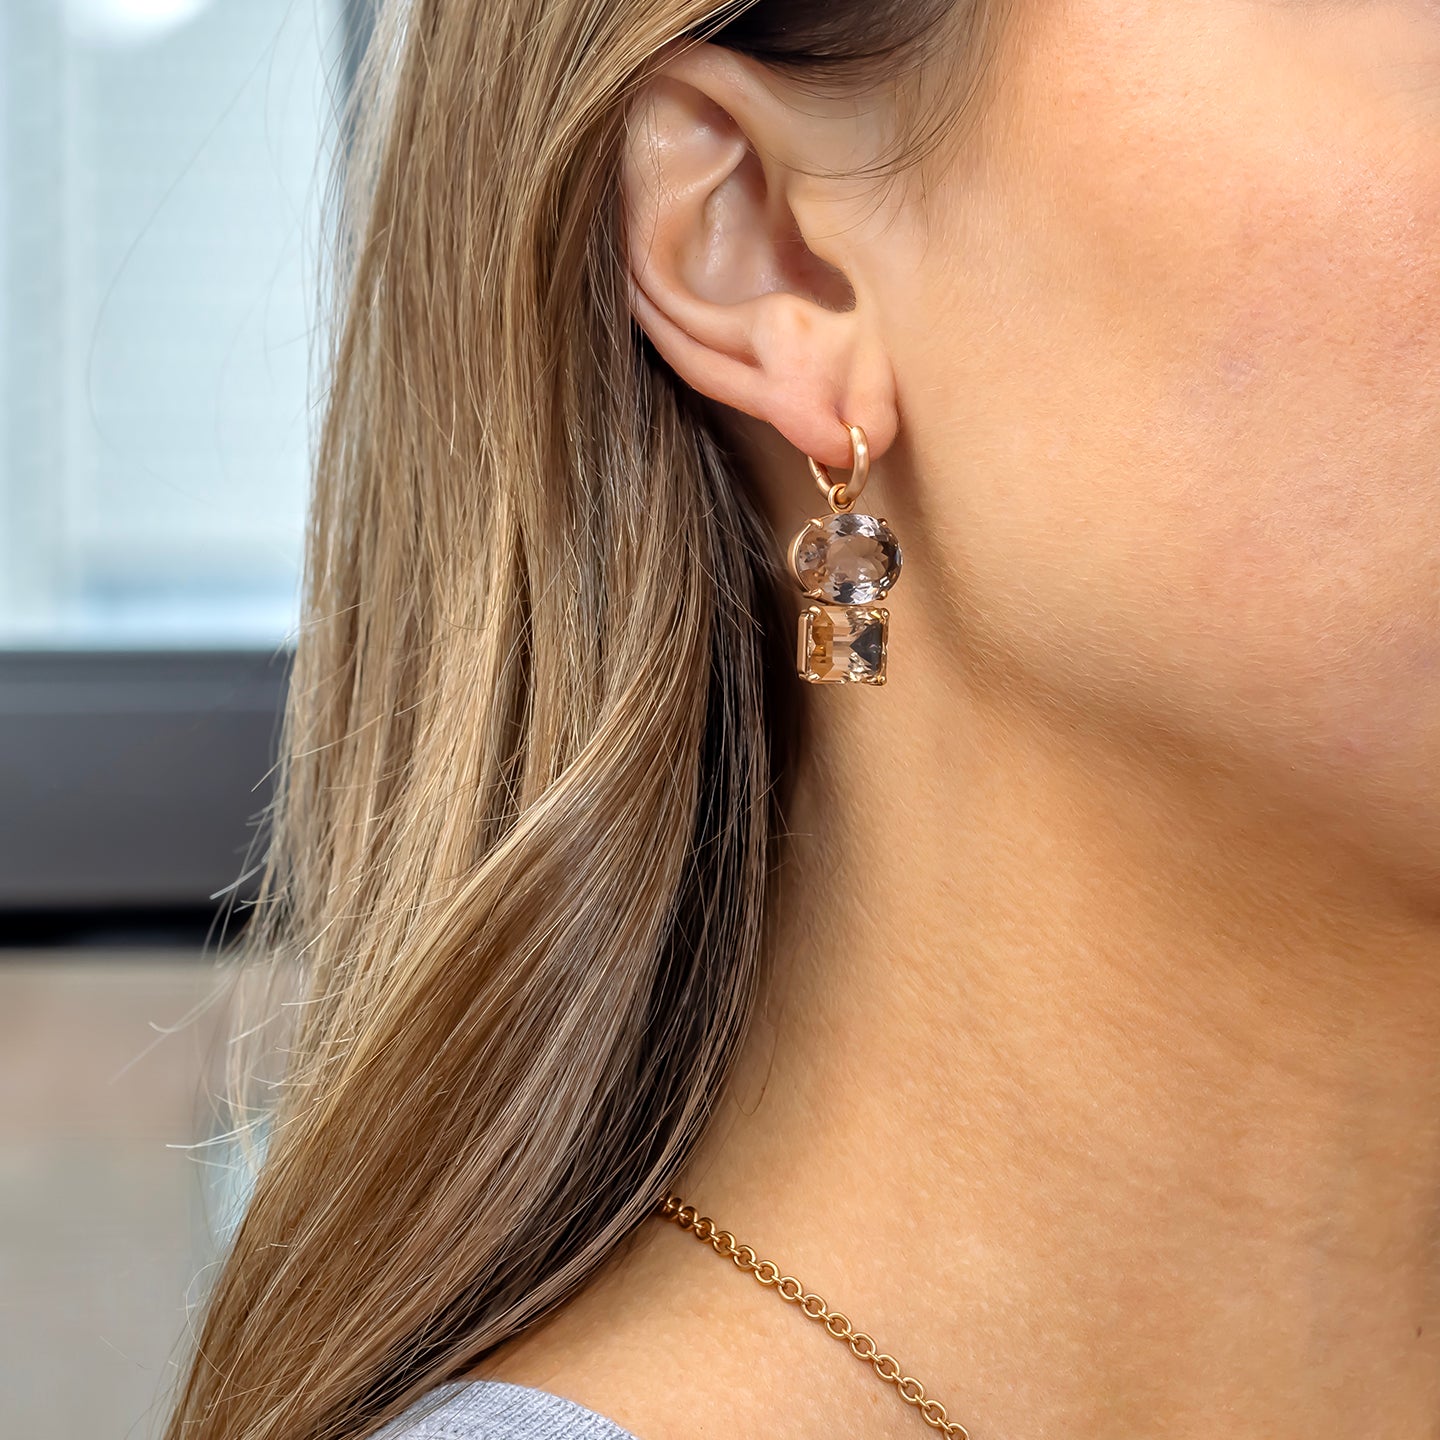 Irene Neuwirth 'Gemmy Gem' One-of-a-Kind Tourmaline Earrings